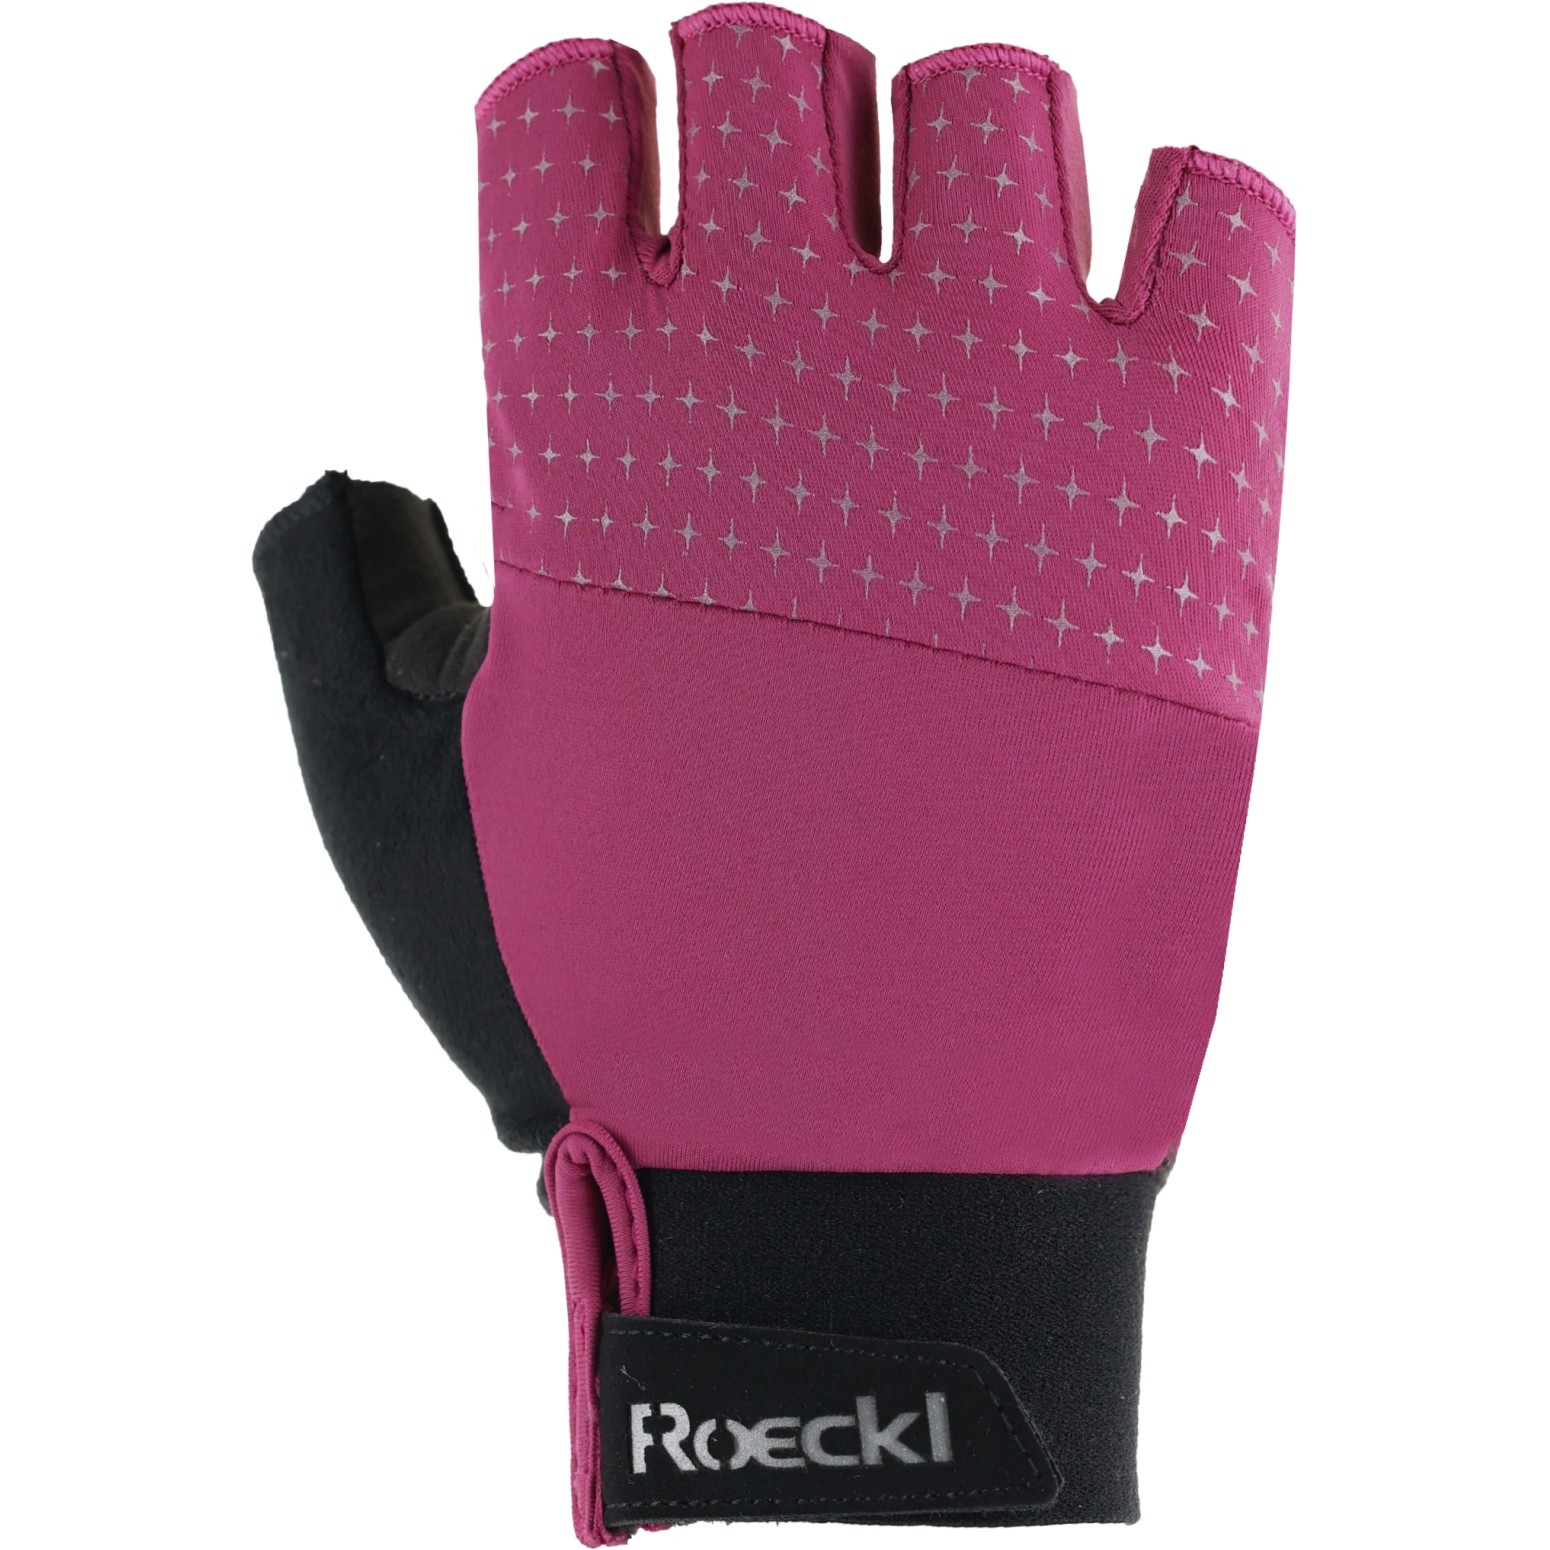 Foto de Roeckl Sports Guantes Ciclismo Mujer - Diamante - posh pink 4350